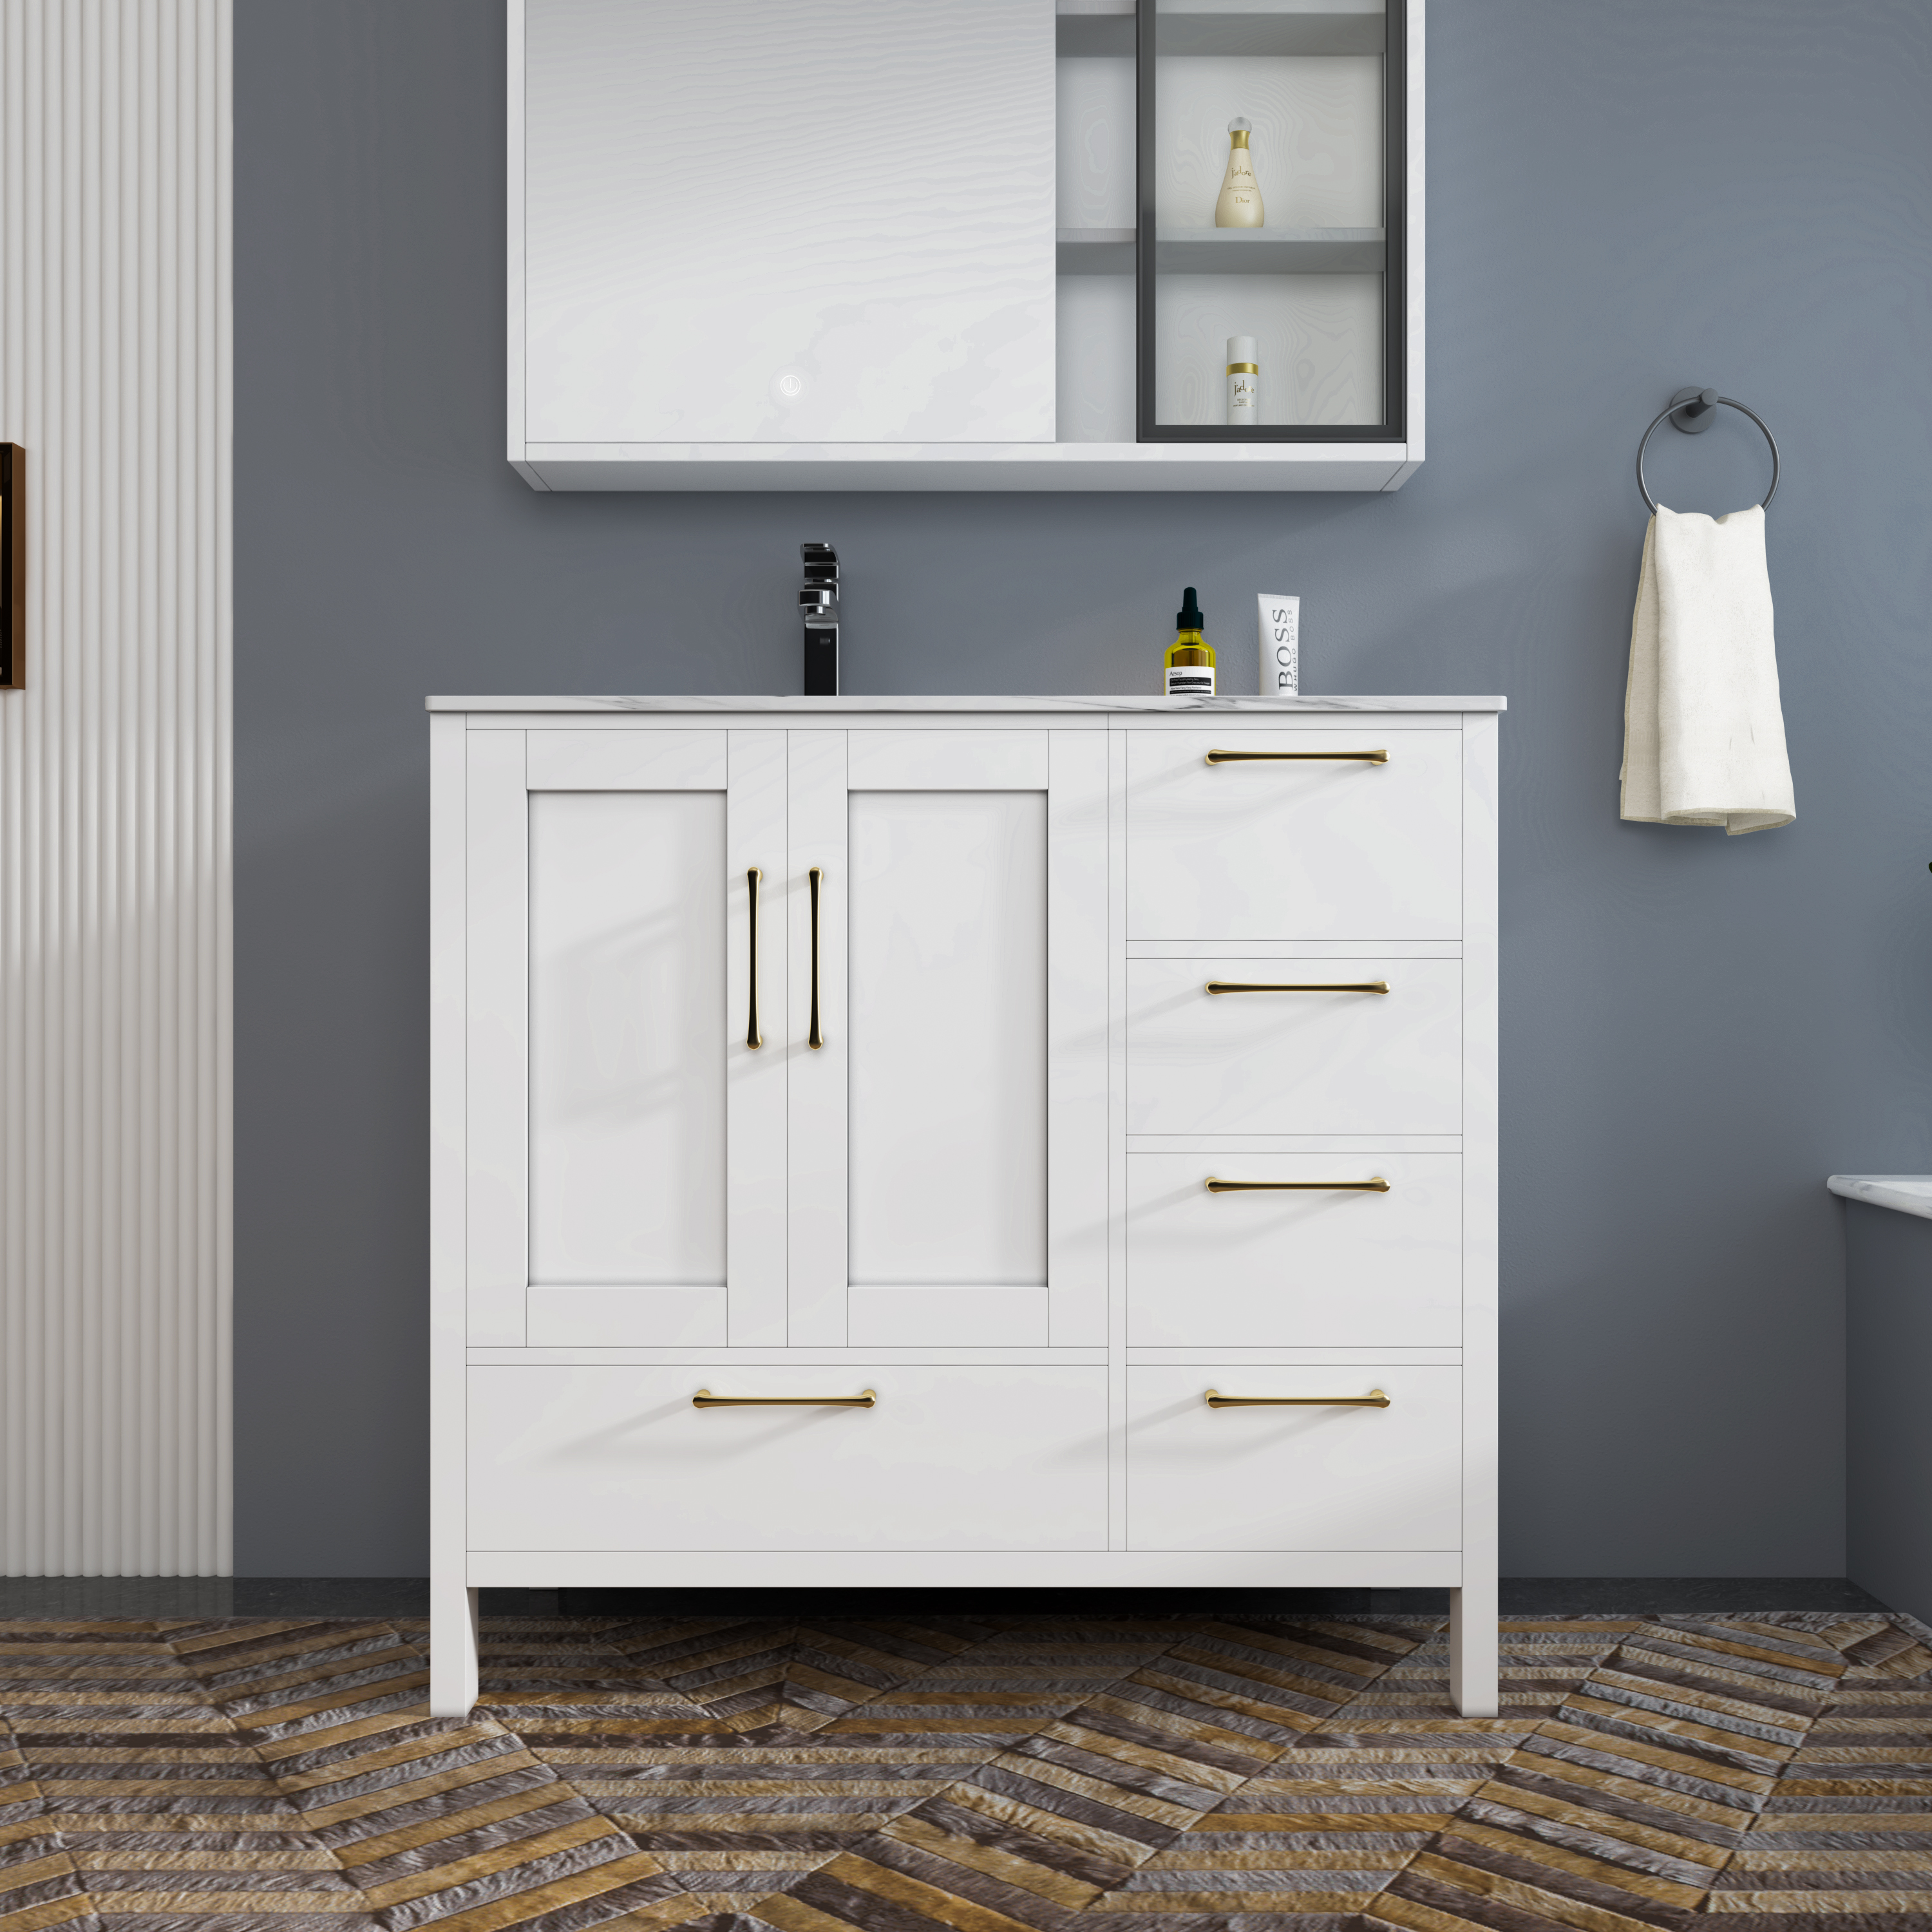 MEJE #S09B – 36 inch Single Sink Bathroom Vanity Set with Ceramic Undermount Vessel Sink, Modern Floor Standing Storage Cabinet Set, White